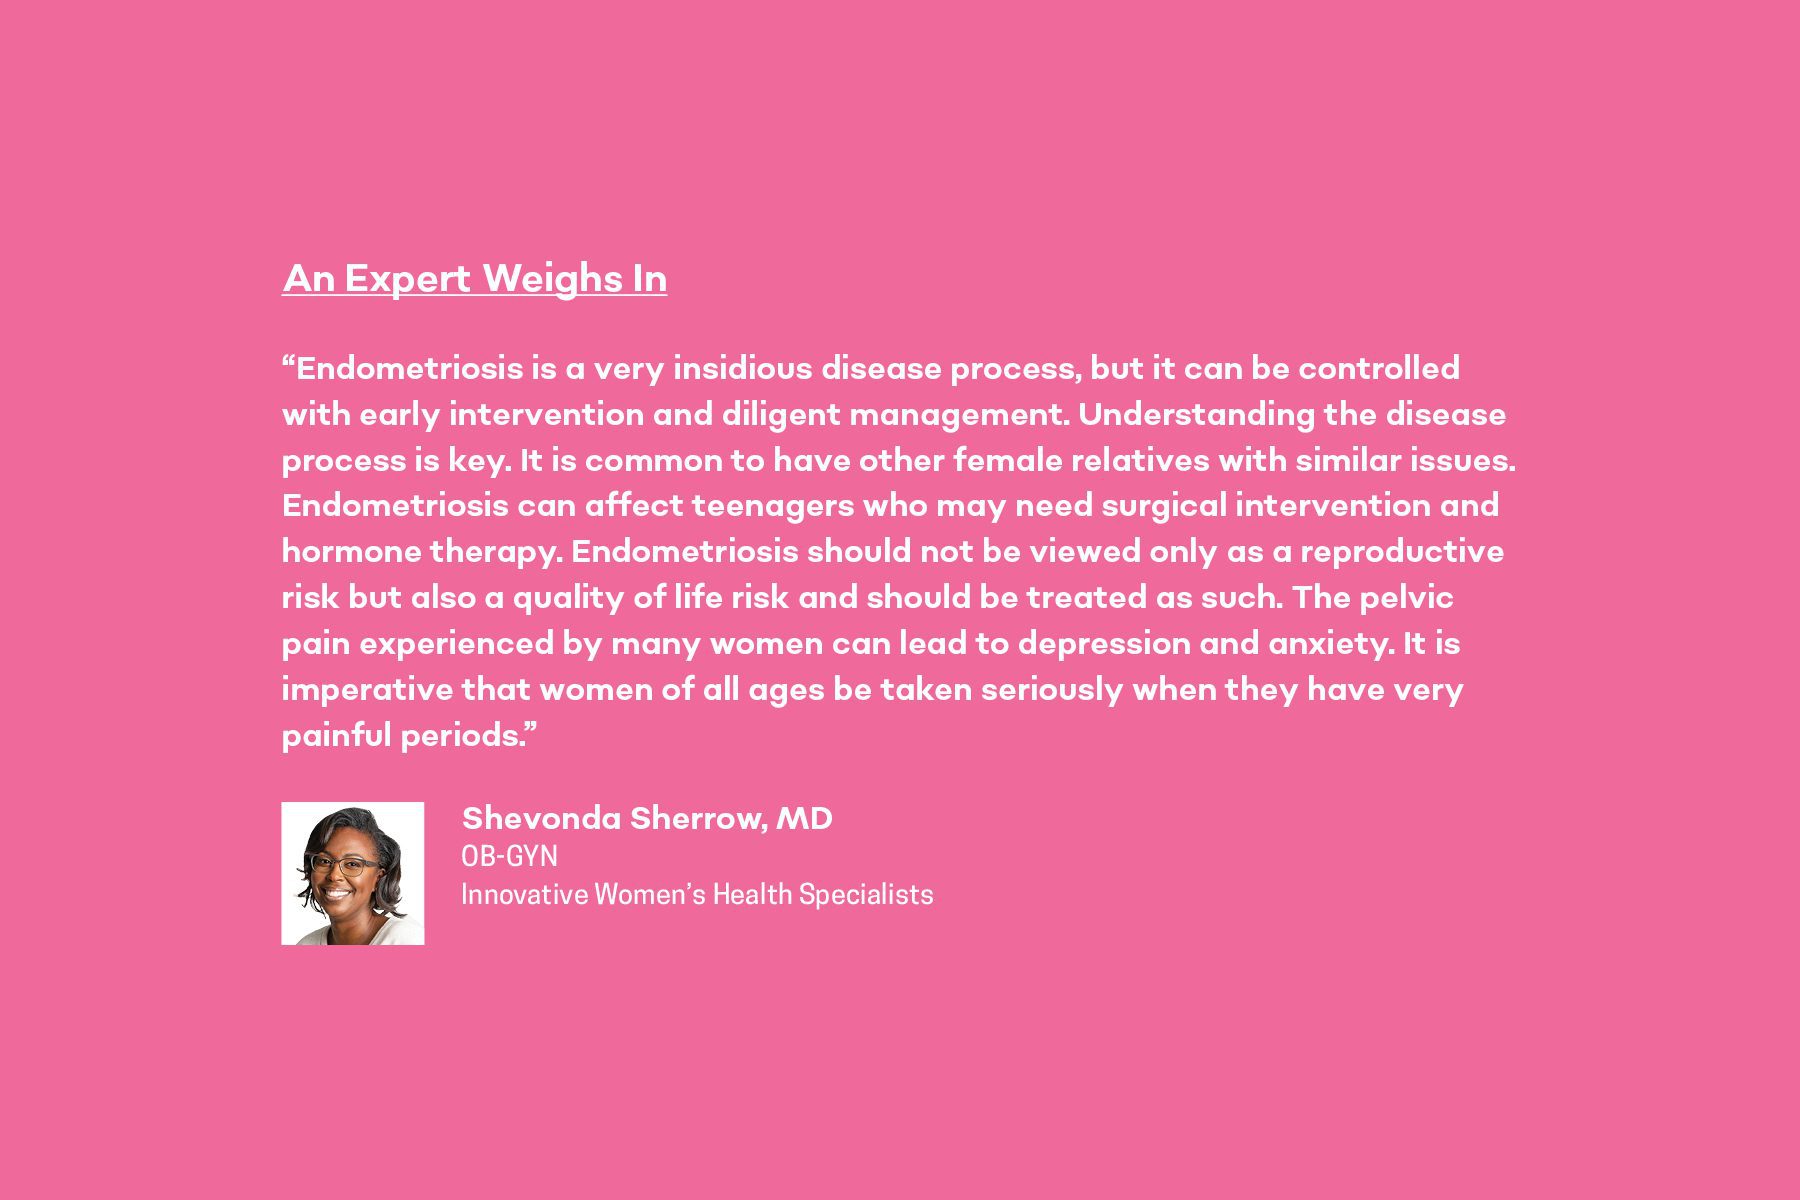 expert advice on endometriosis from Dr. Shevonda Sherrow at Innovative Women's Health Services